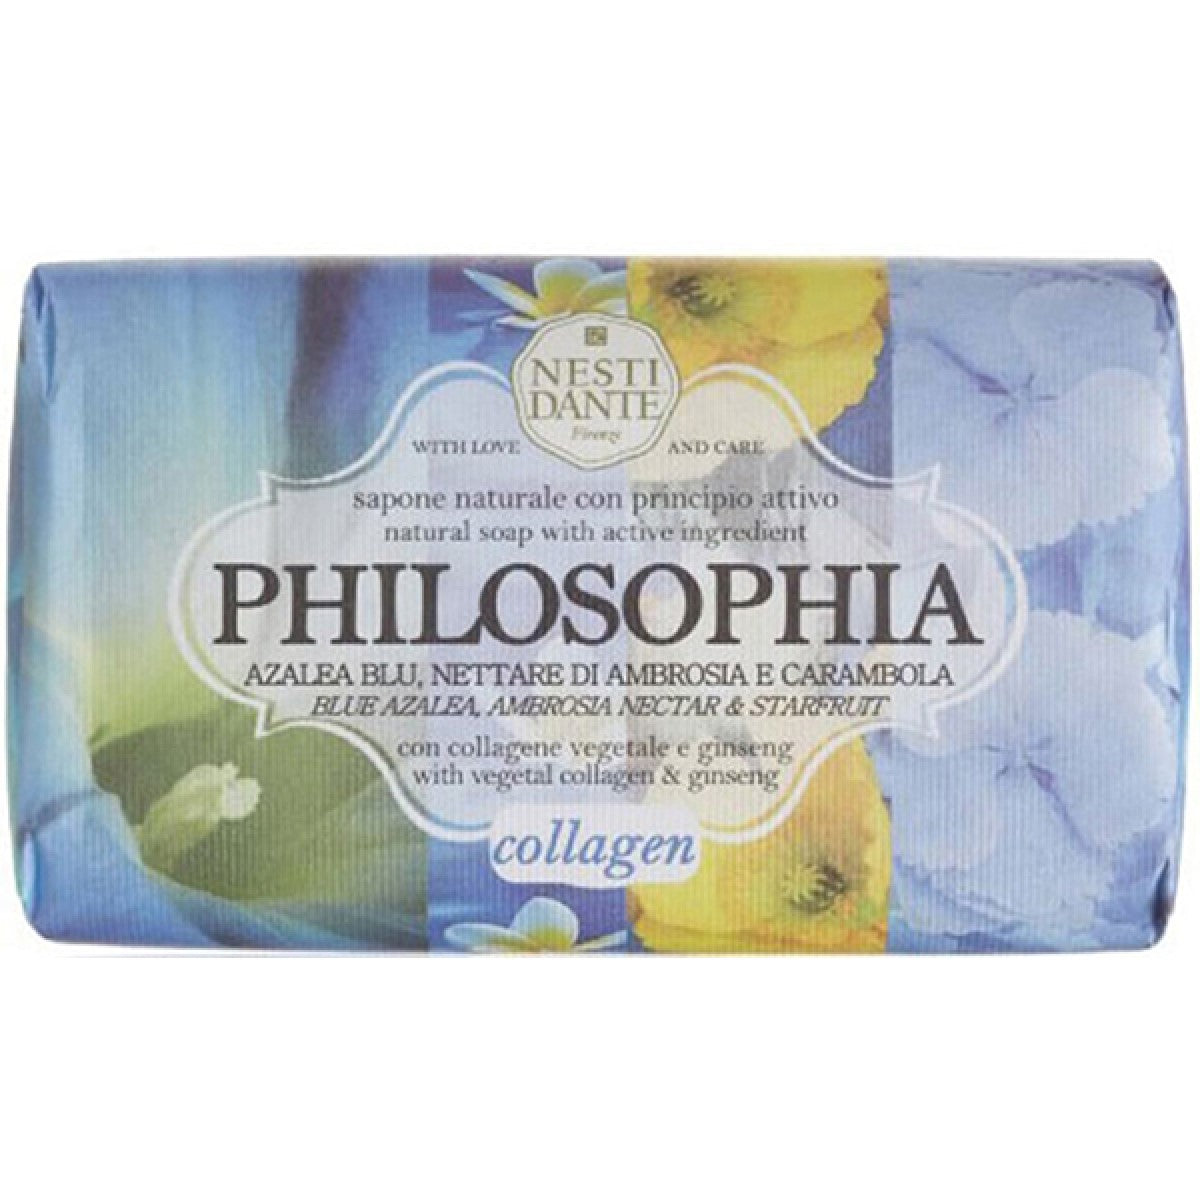 Primary Image of Philosophia Collagen Soap